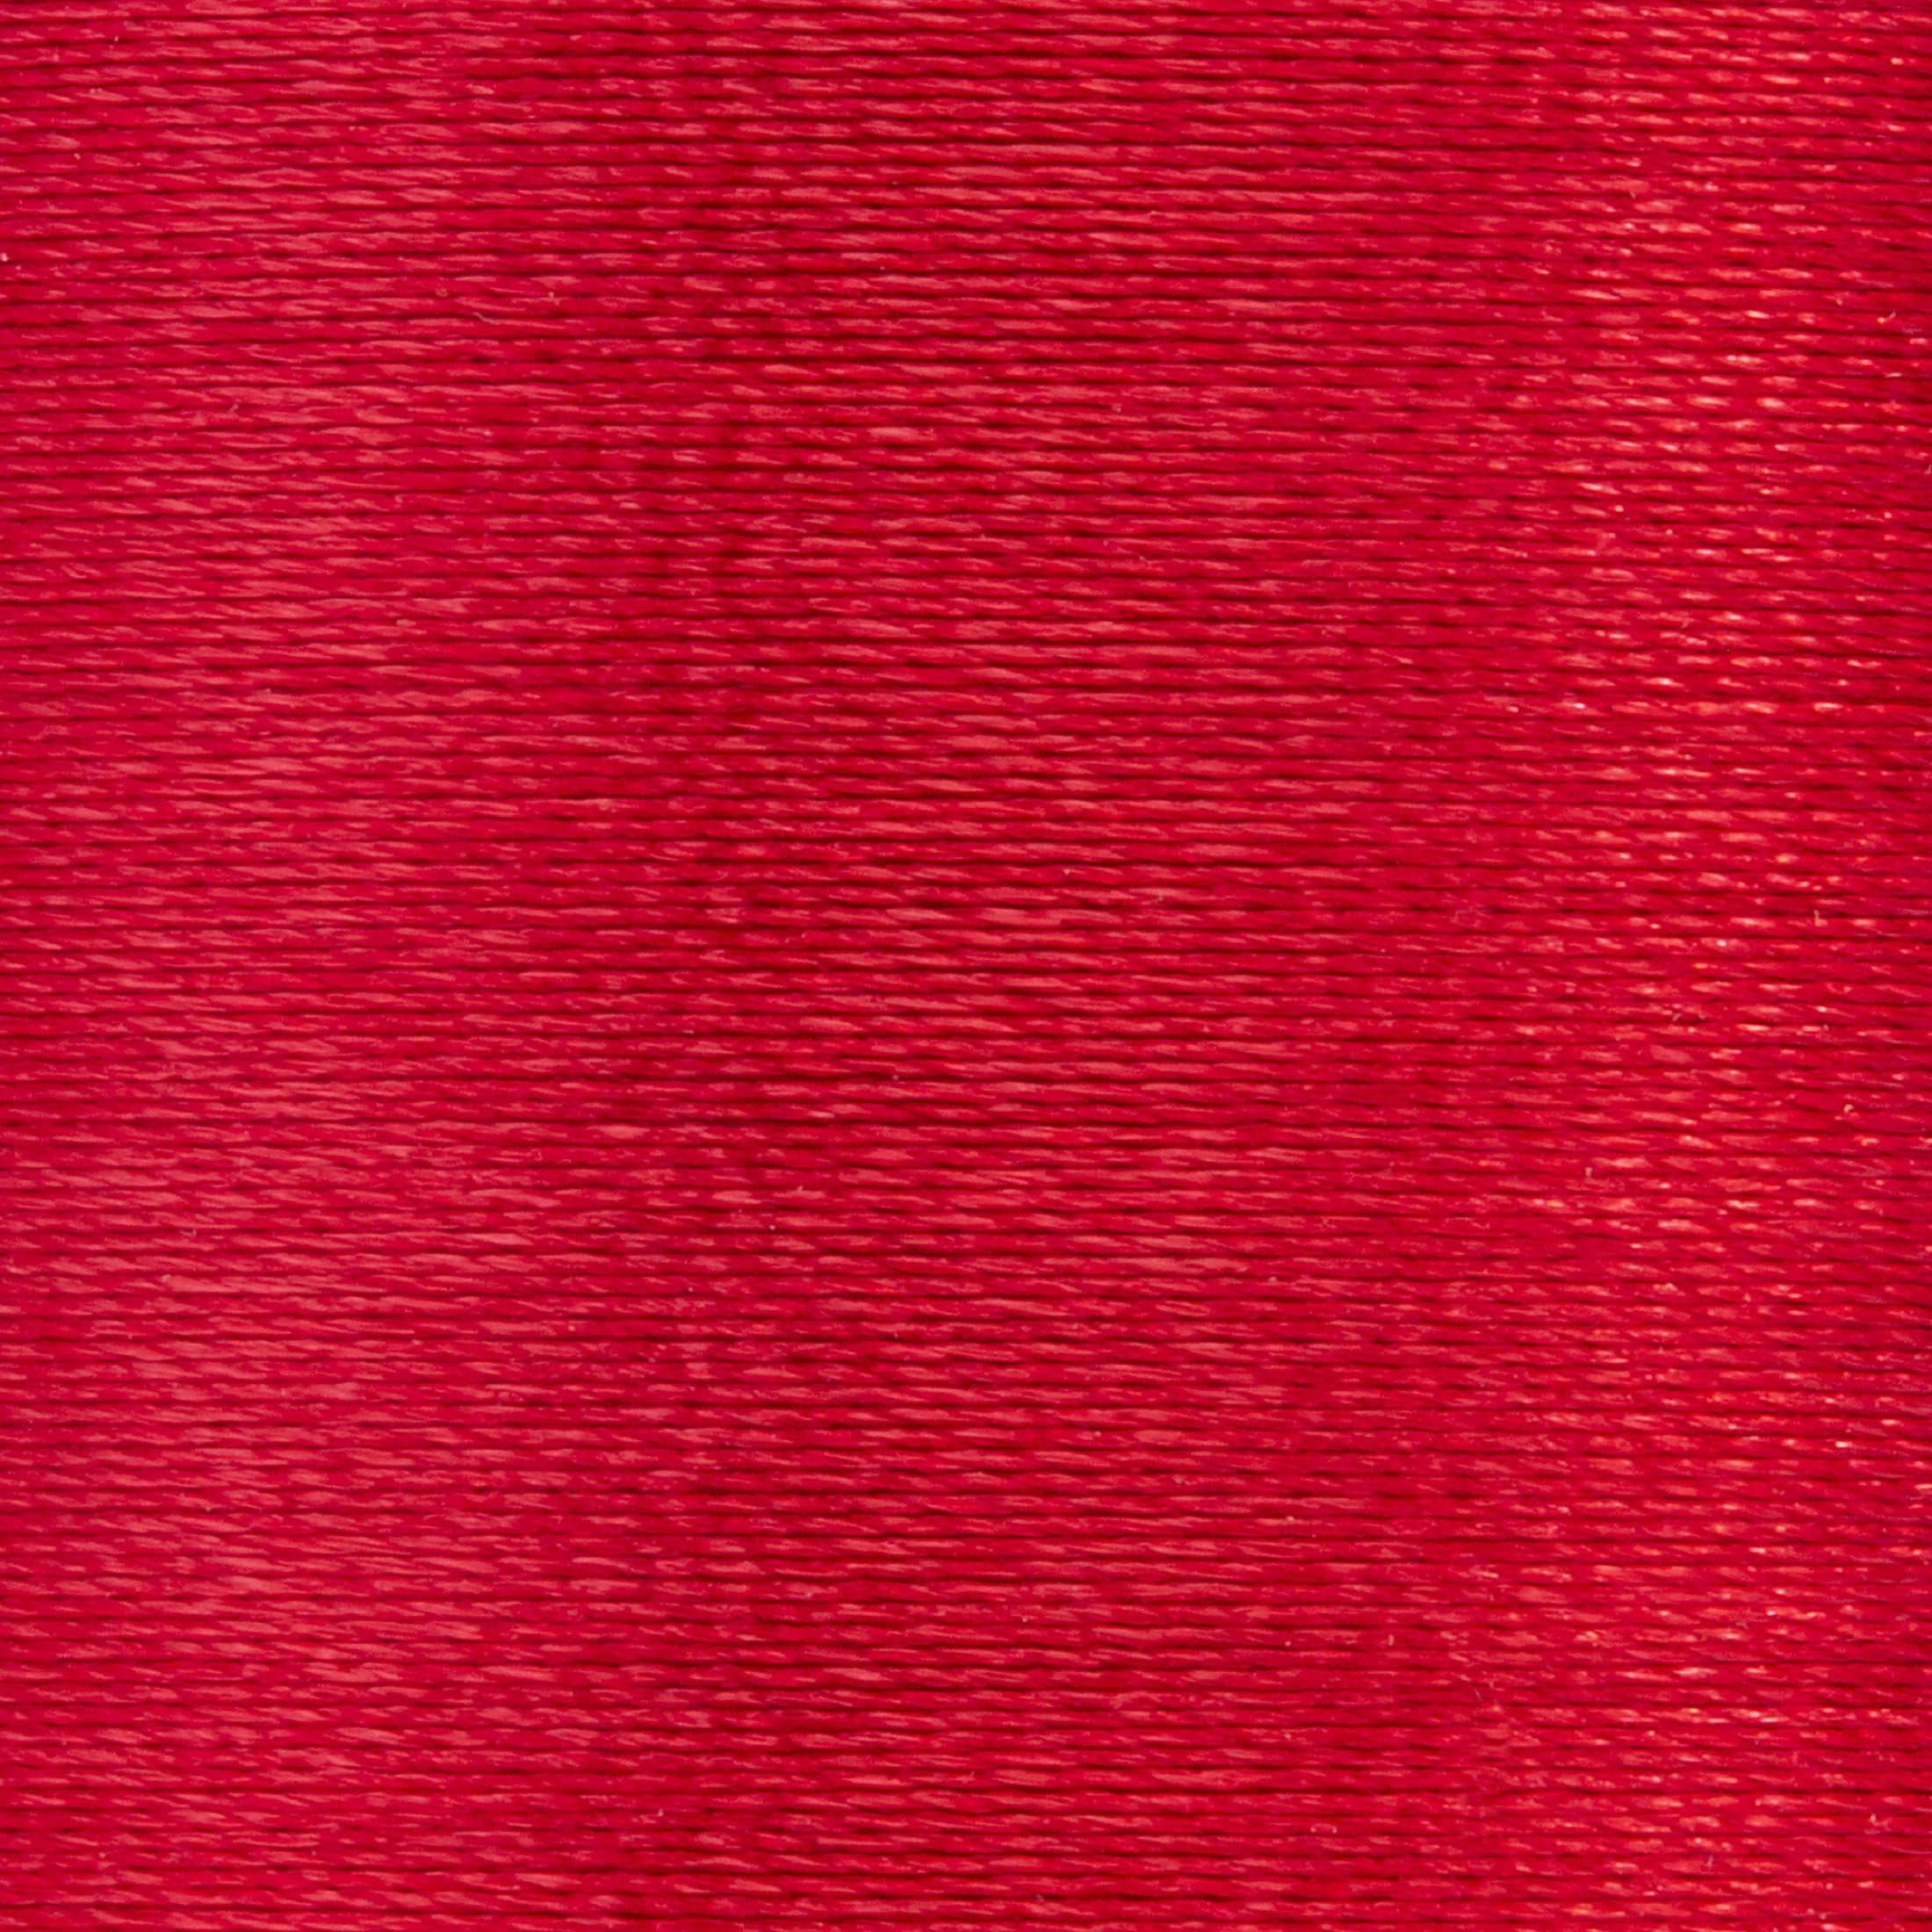 Coats & Clark Trilobal Embroidery Sun Yellow Polyester Thread, 300 Yards 